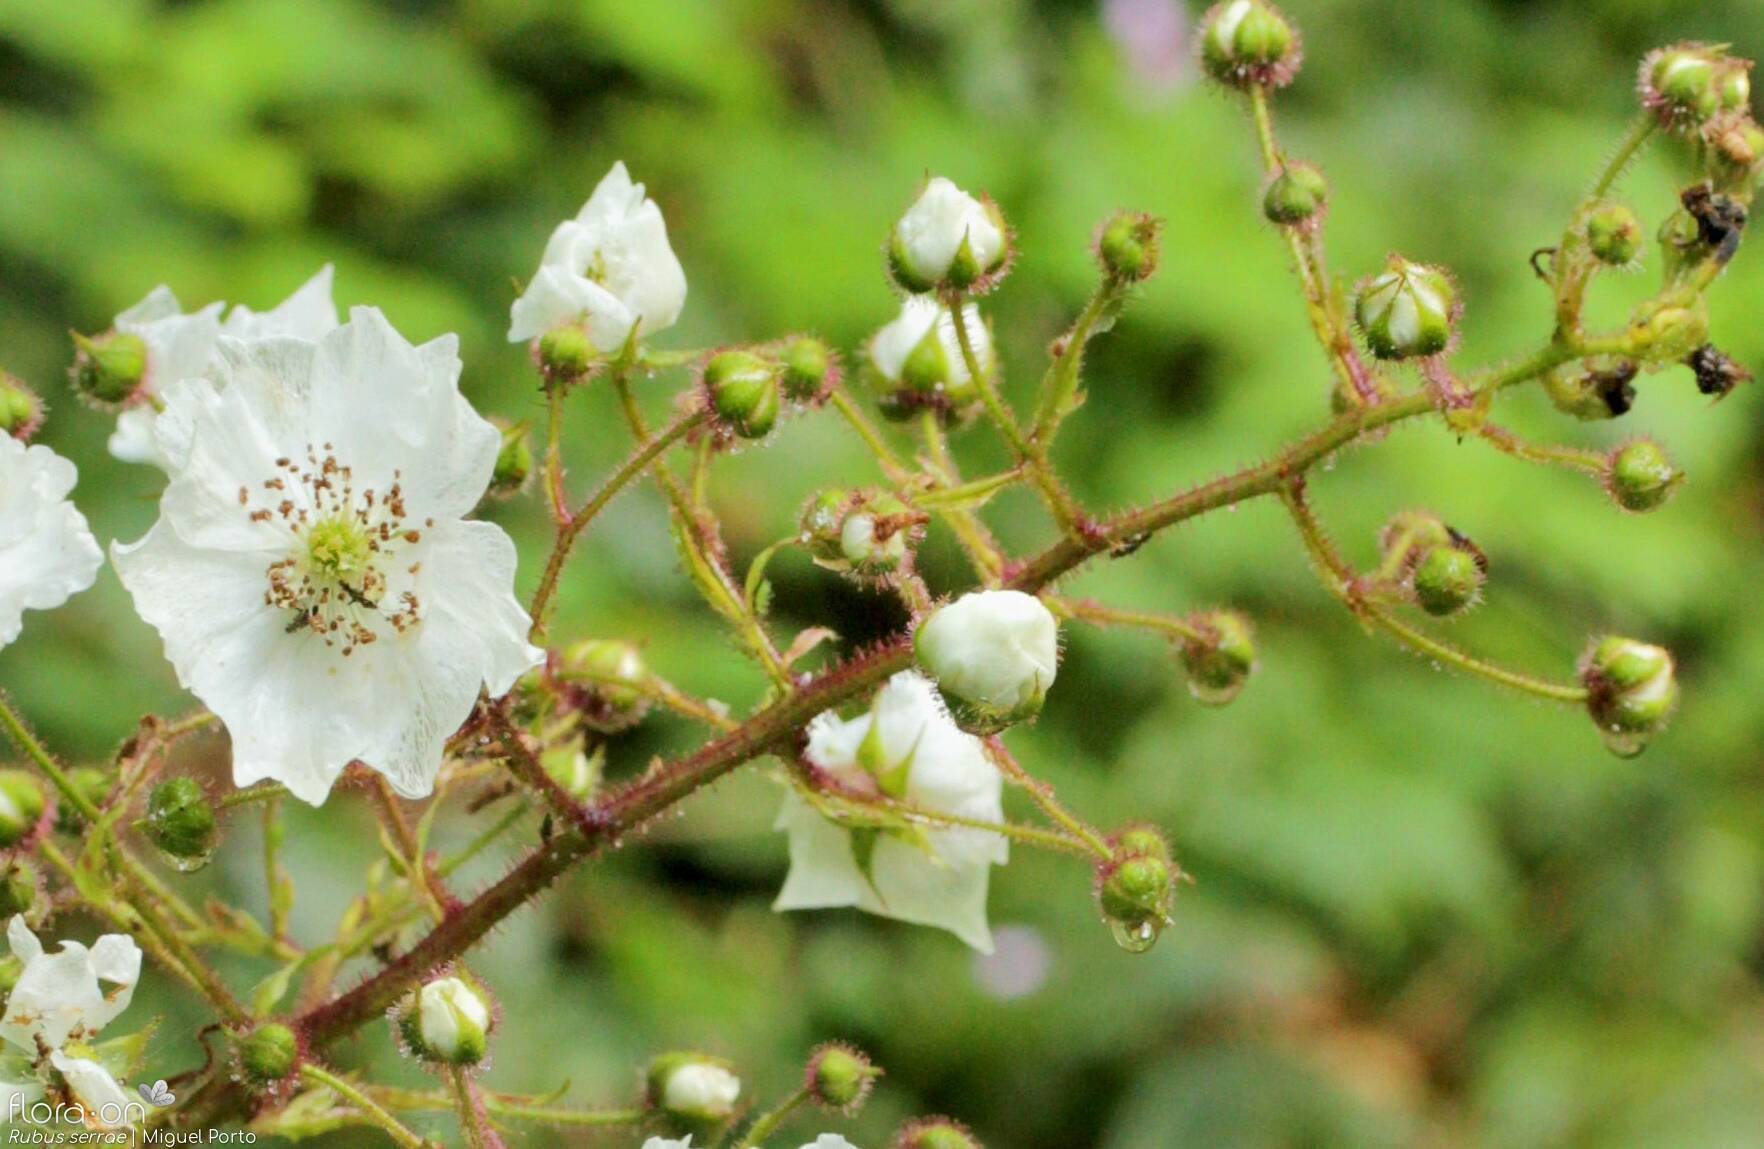 Rubus serrae - Flor (geral) | Miguel Porto; CC BY-NC 4.0